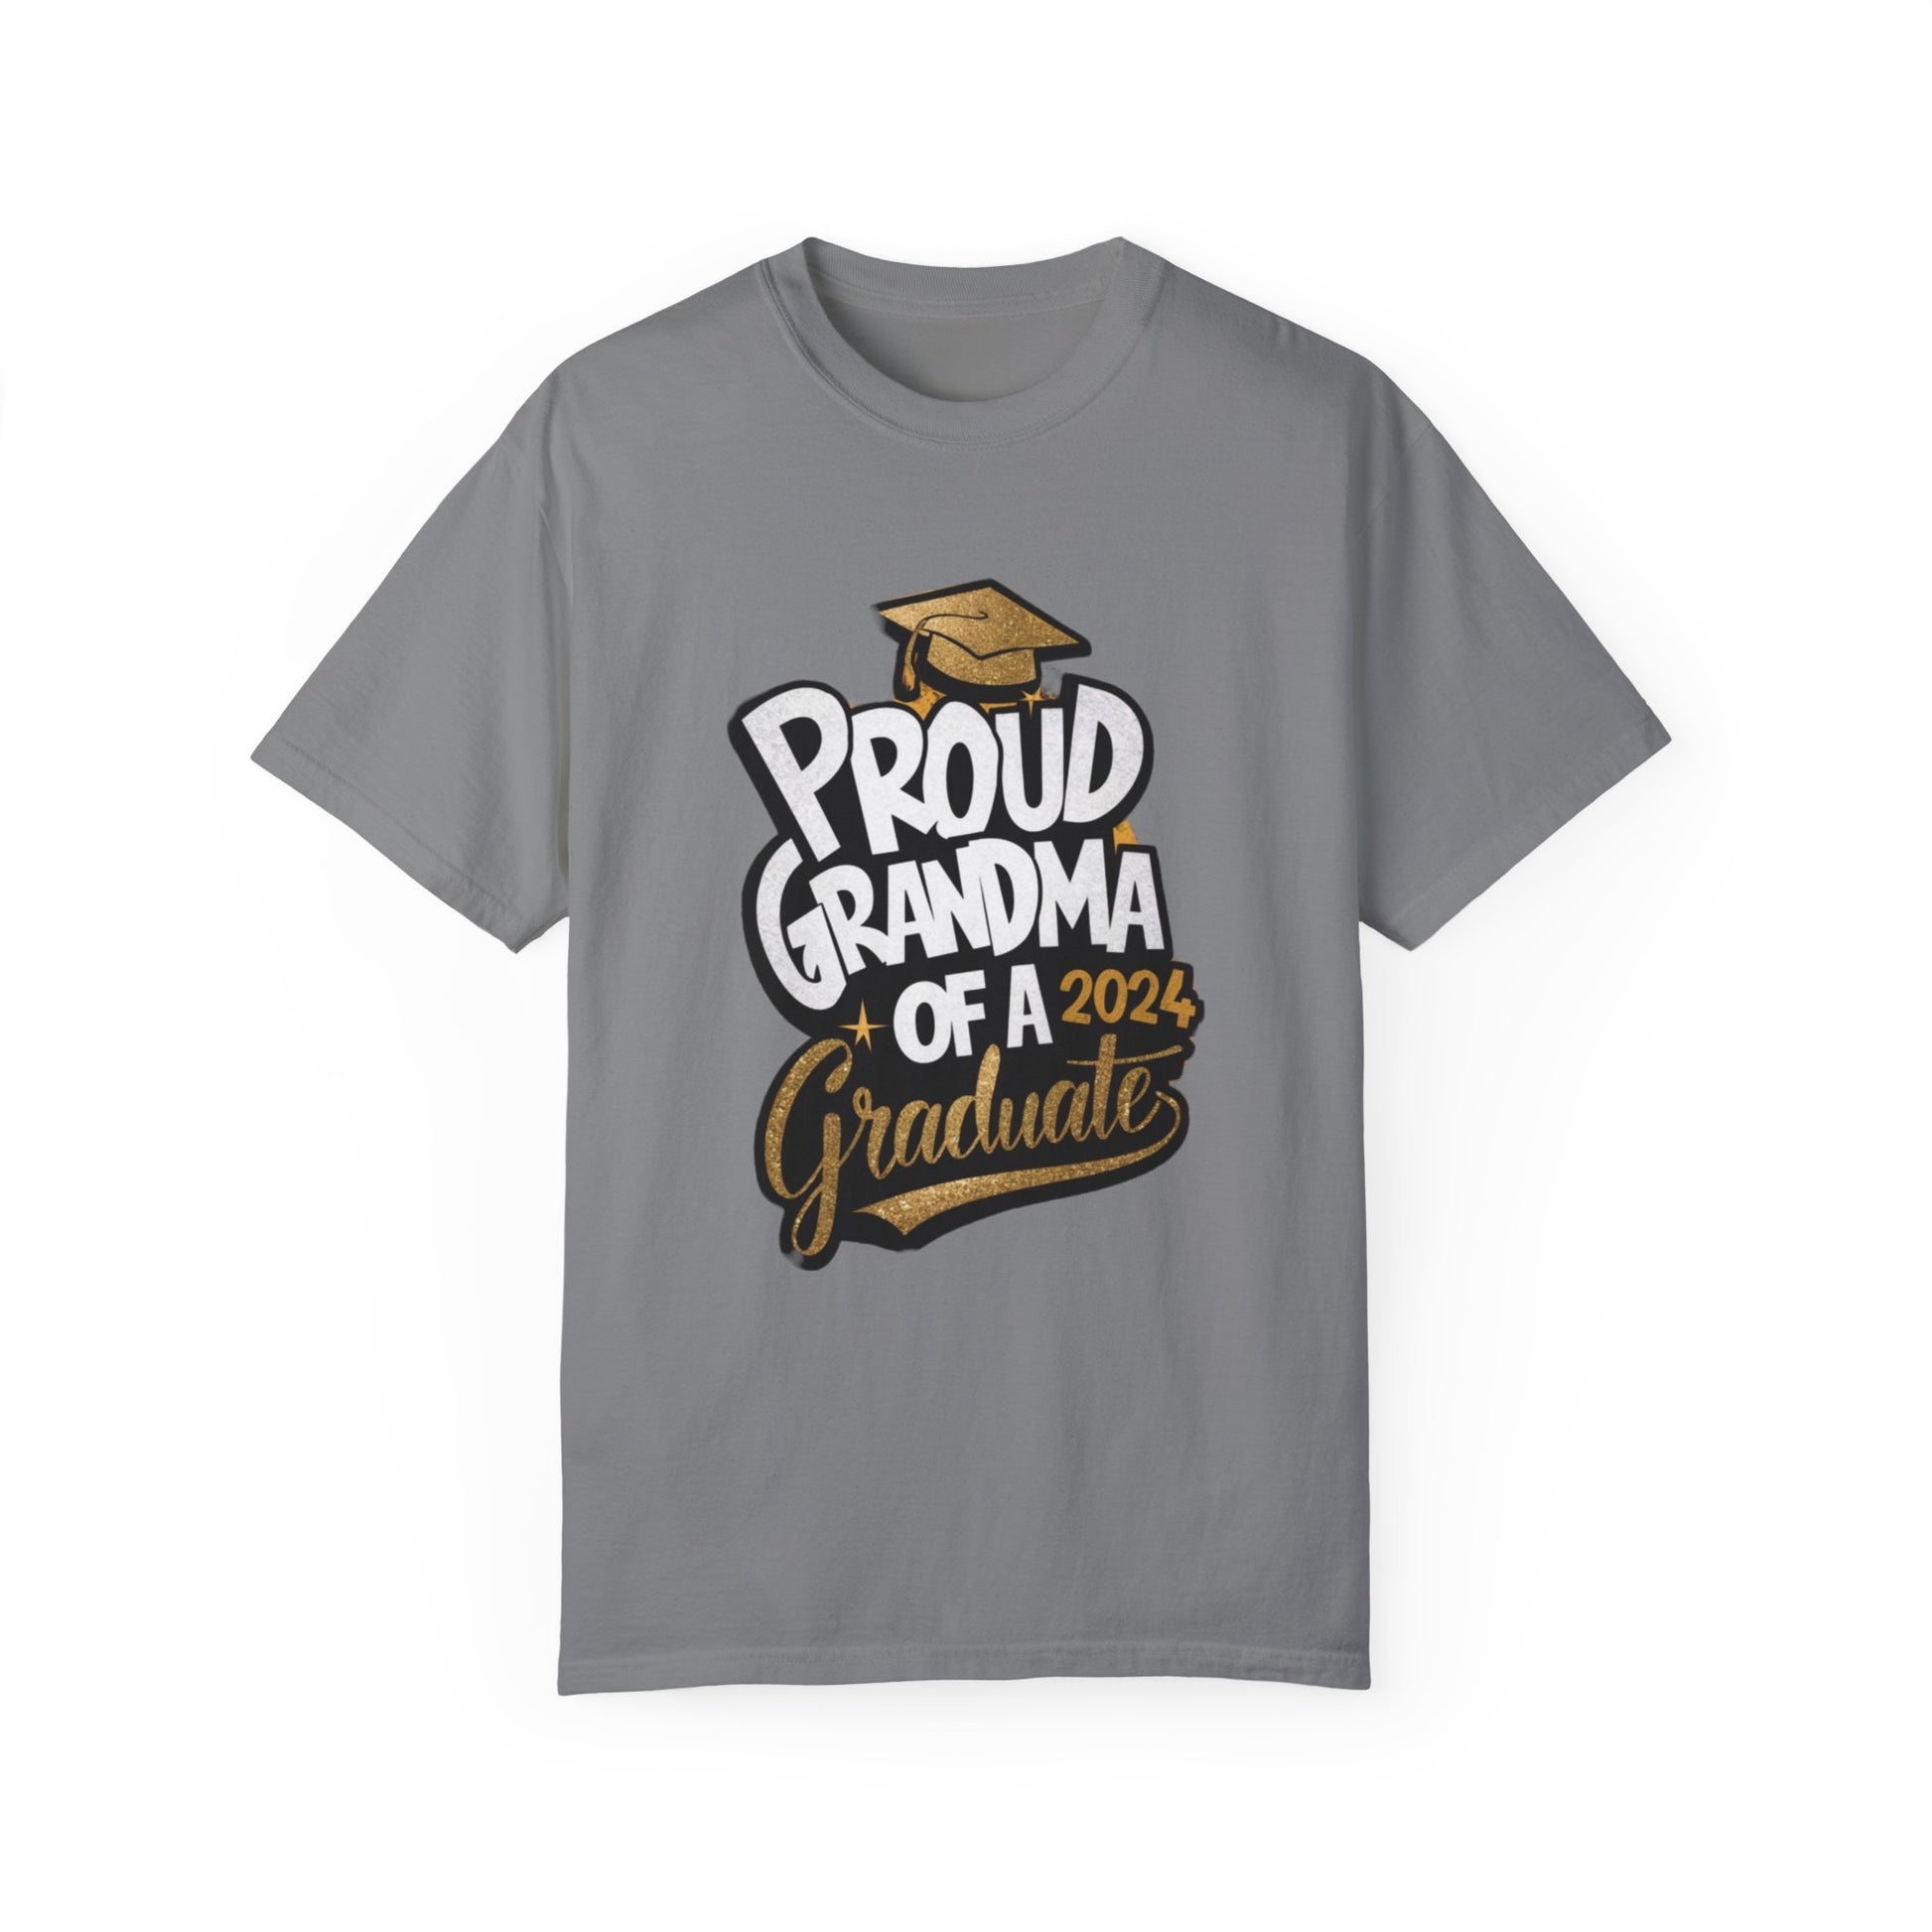 Proud of Grandma 2024 Graduate Unisex Garment-dyed T-shirt Cotton Funny Humorous Graphic Soft Premium Unisex Men Women Grey T-shirt Birthday Gift-9